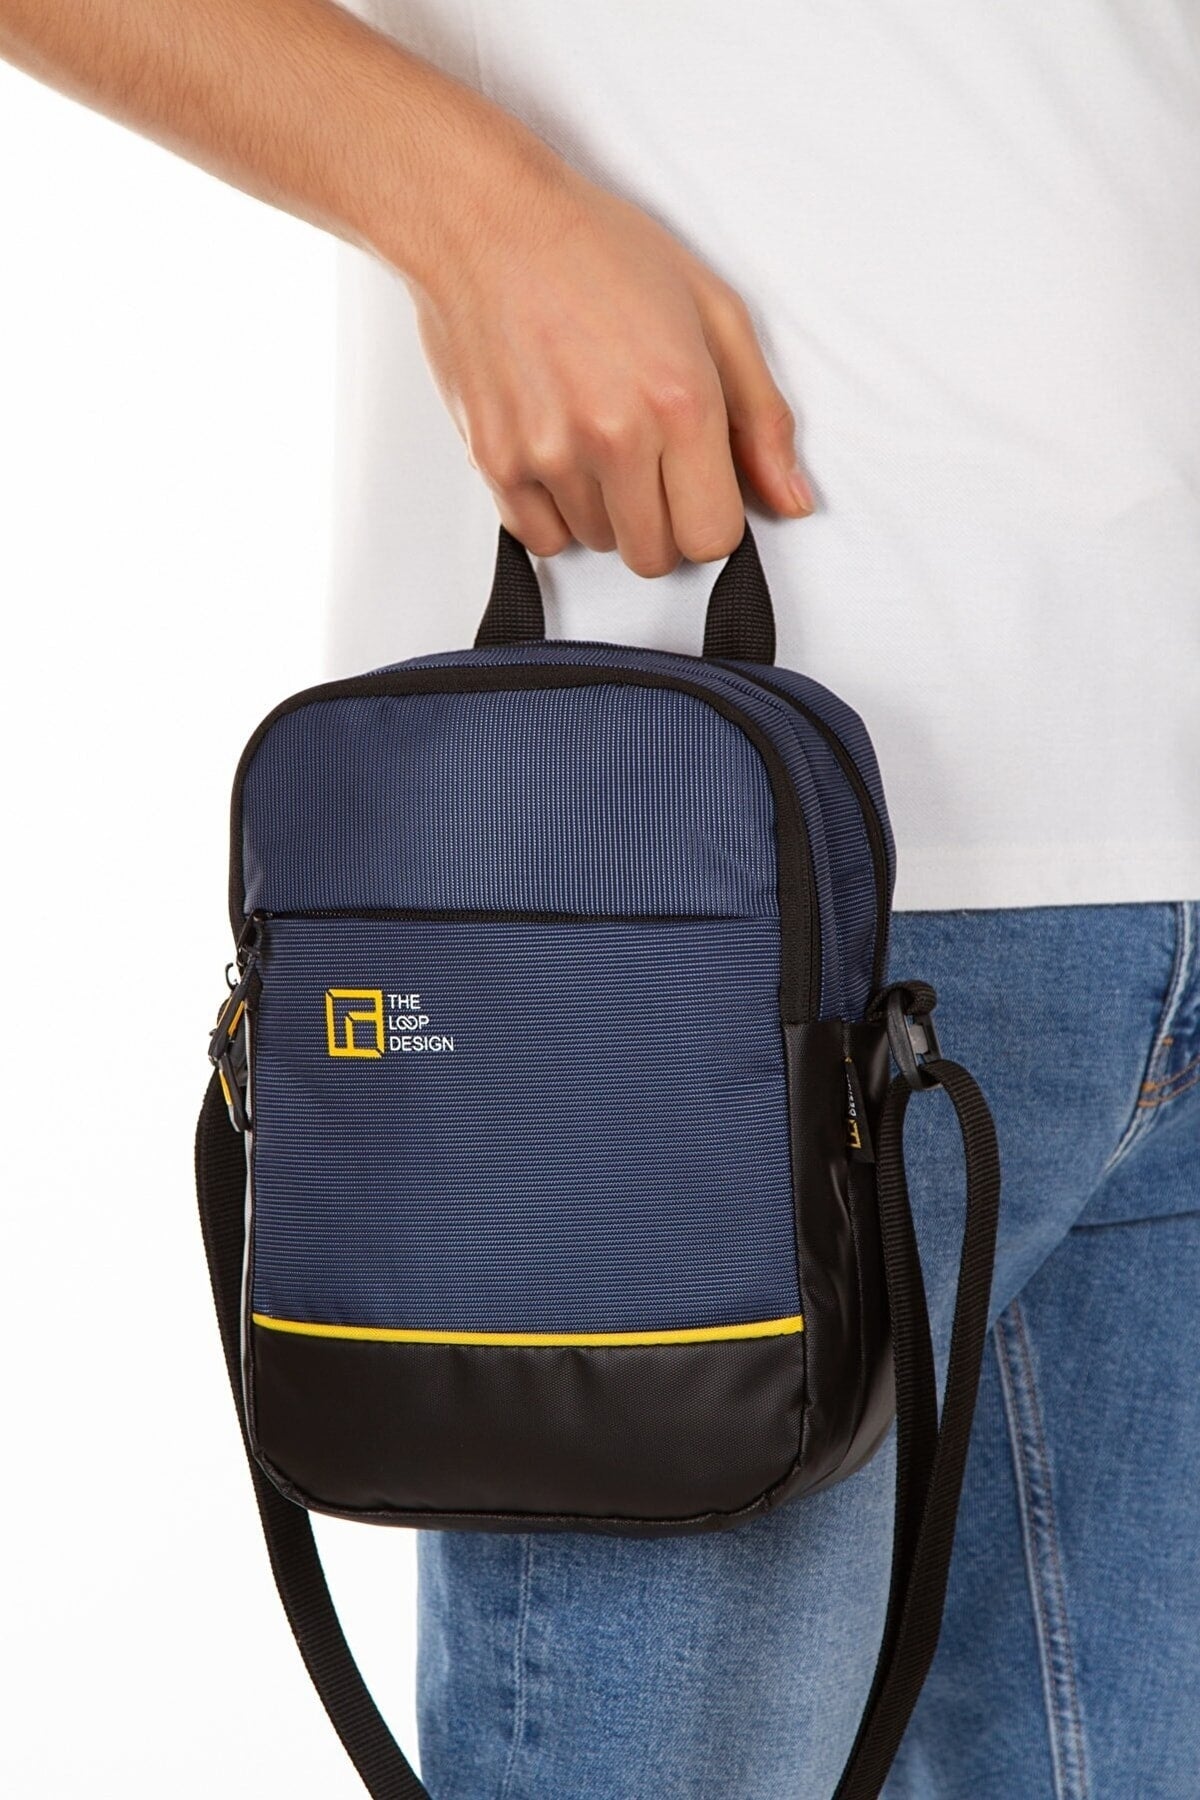 Unisex Navy Blue 6 Compartment Adjustable Long Strap Waterproof Portfolio Bag Cross Hand And Shoulder Bag